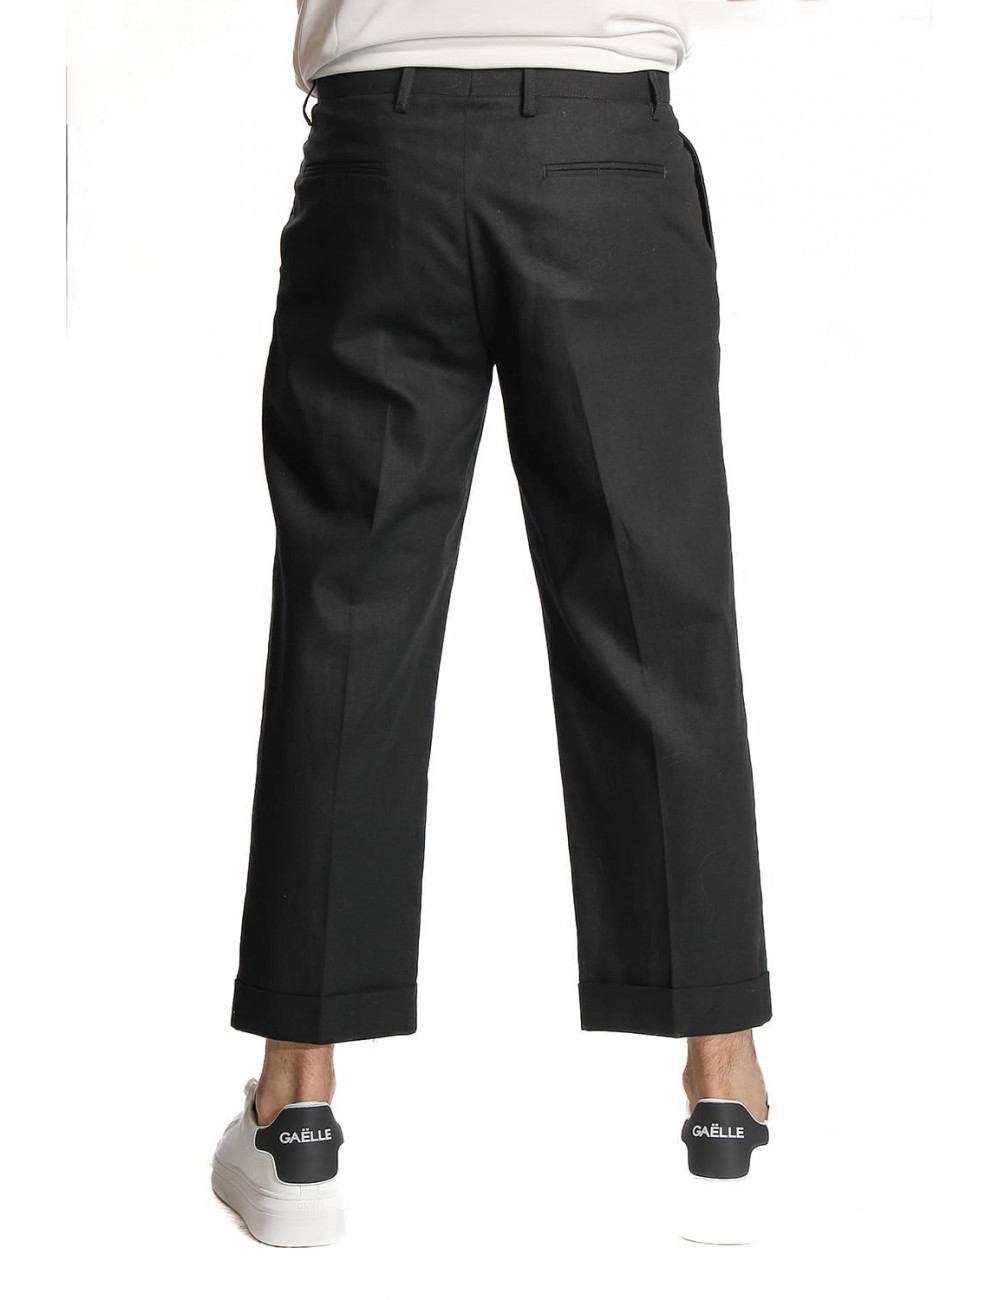 pantalone marsem UOMO NERO - P035 - T155 vista frontale indossato